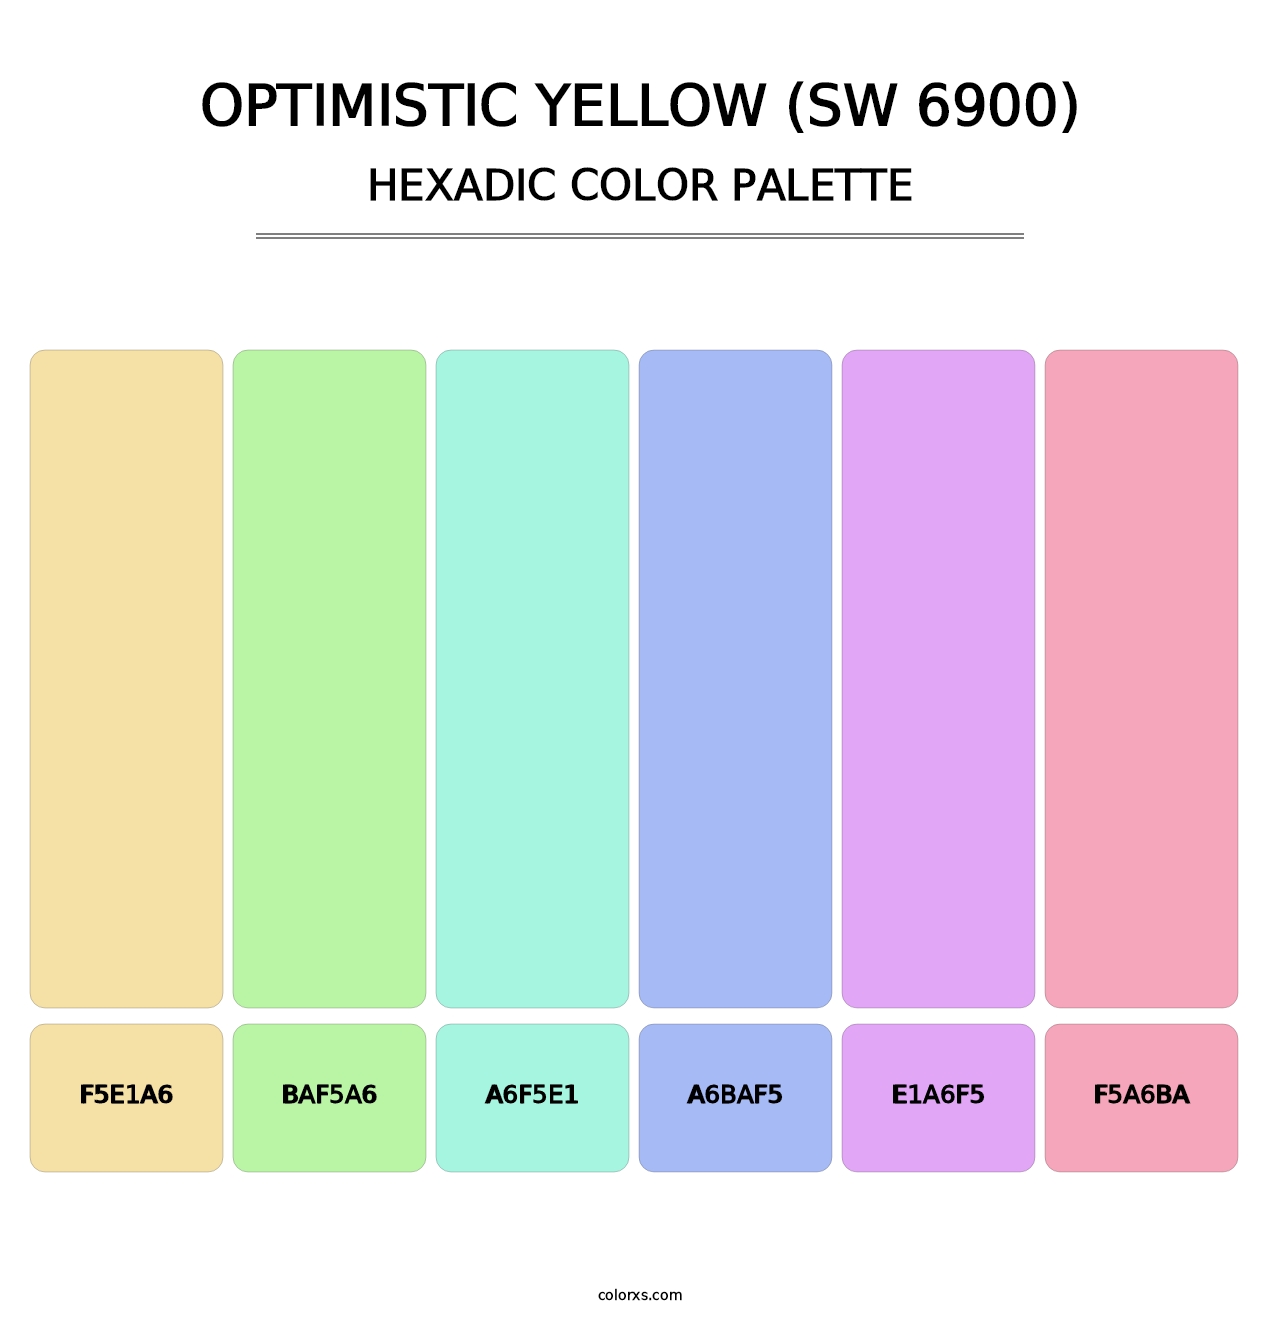 Optimistic Yellow (SW 6900) - Hexadic Color Palette